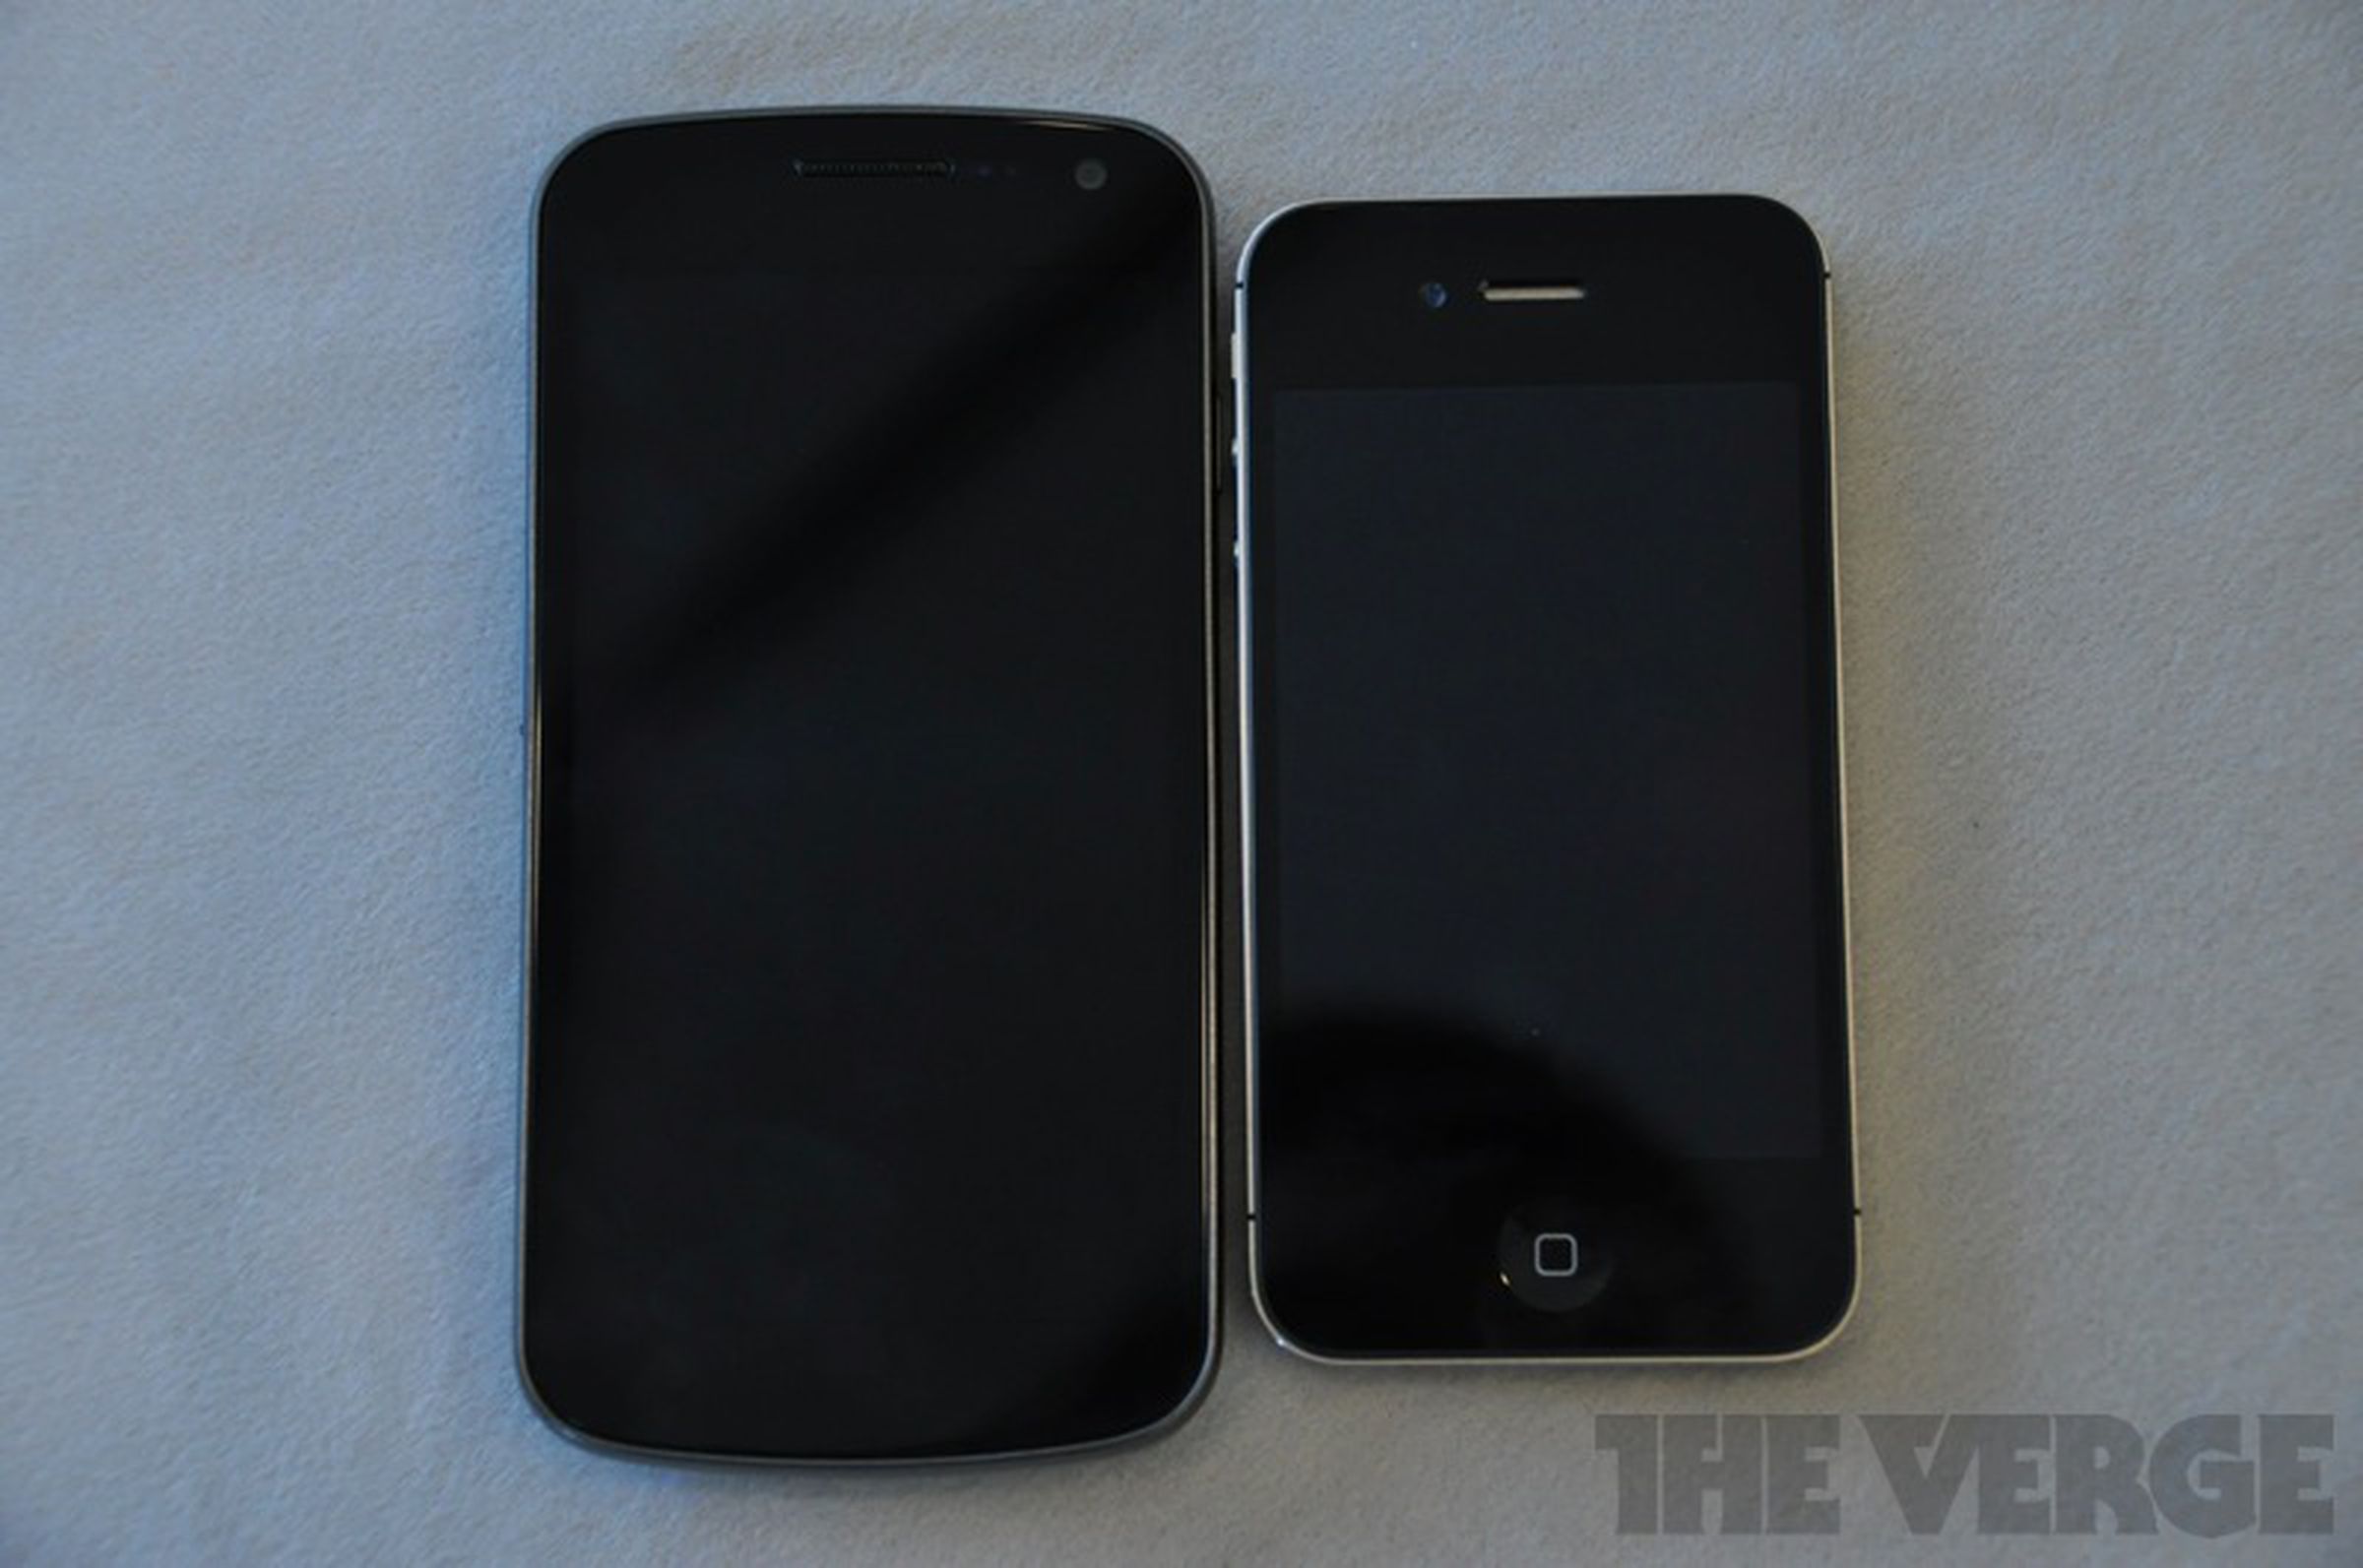 Samsung Galaxy Nexus vs iPhone 4S comparison photos